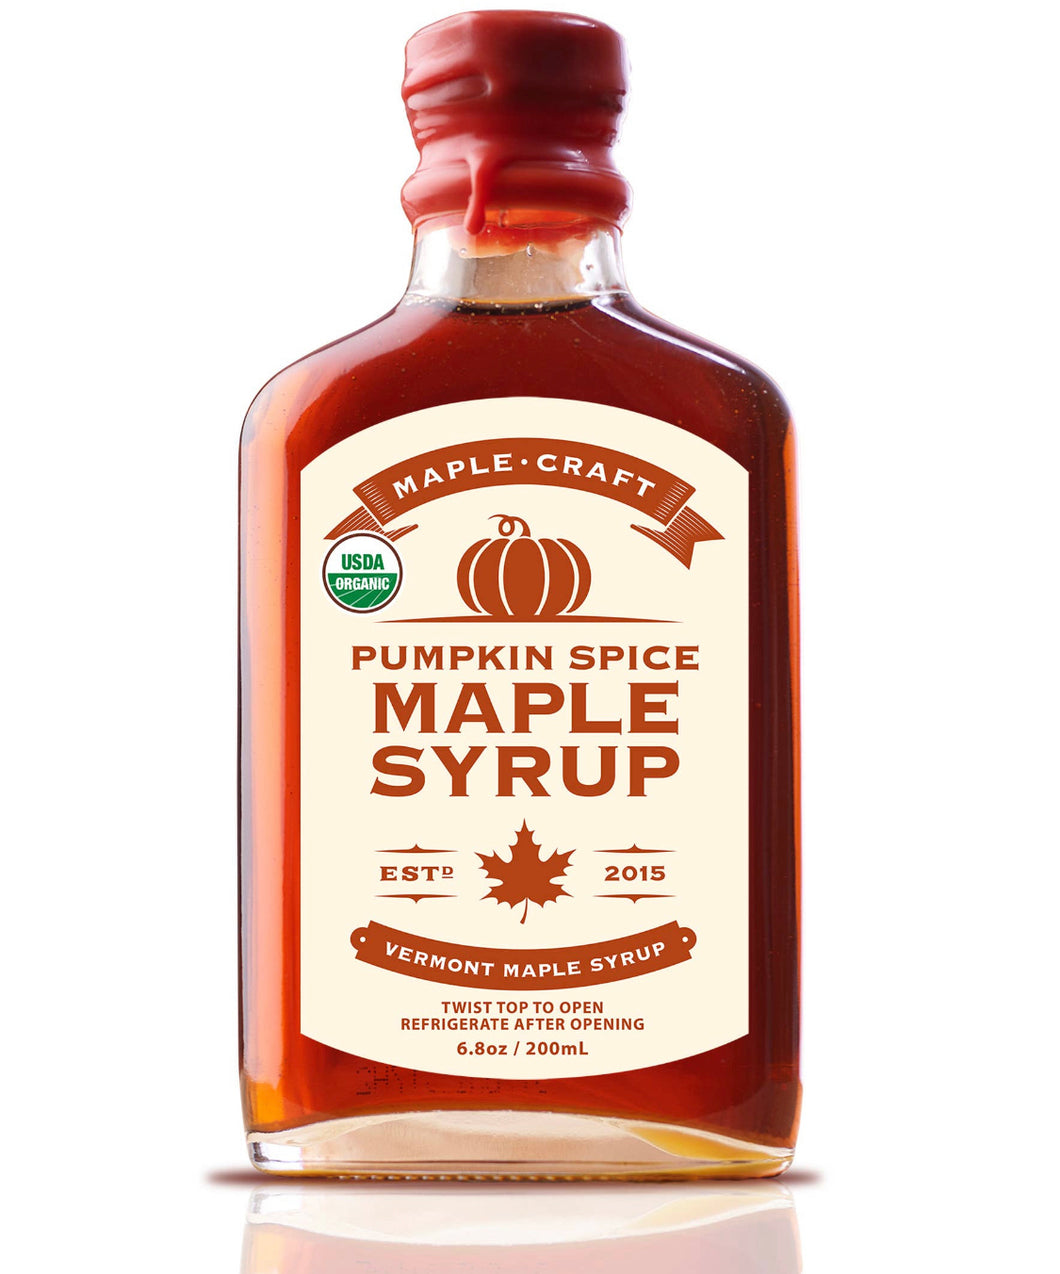 Pumpkin spice maple syrup